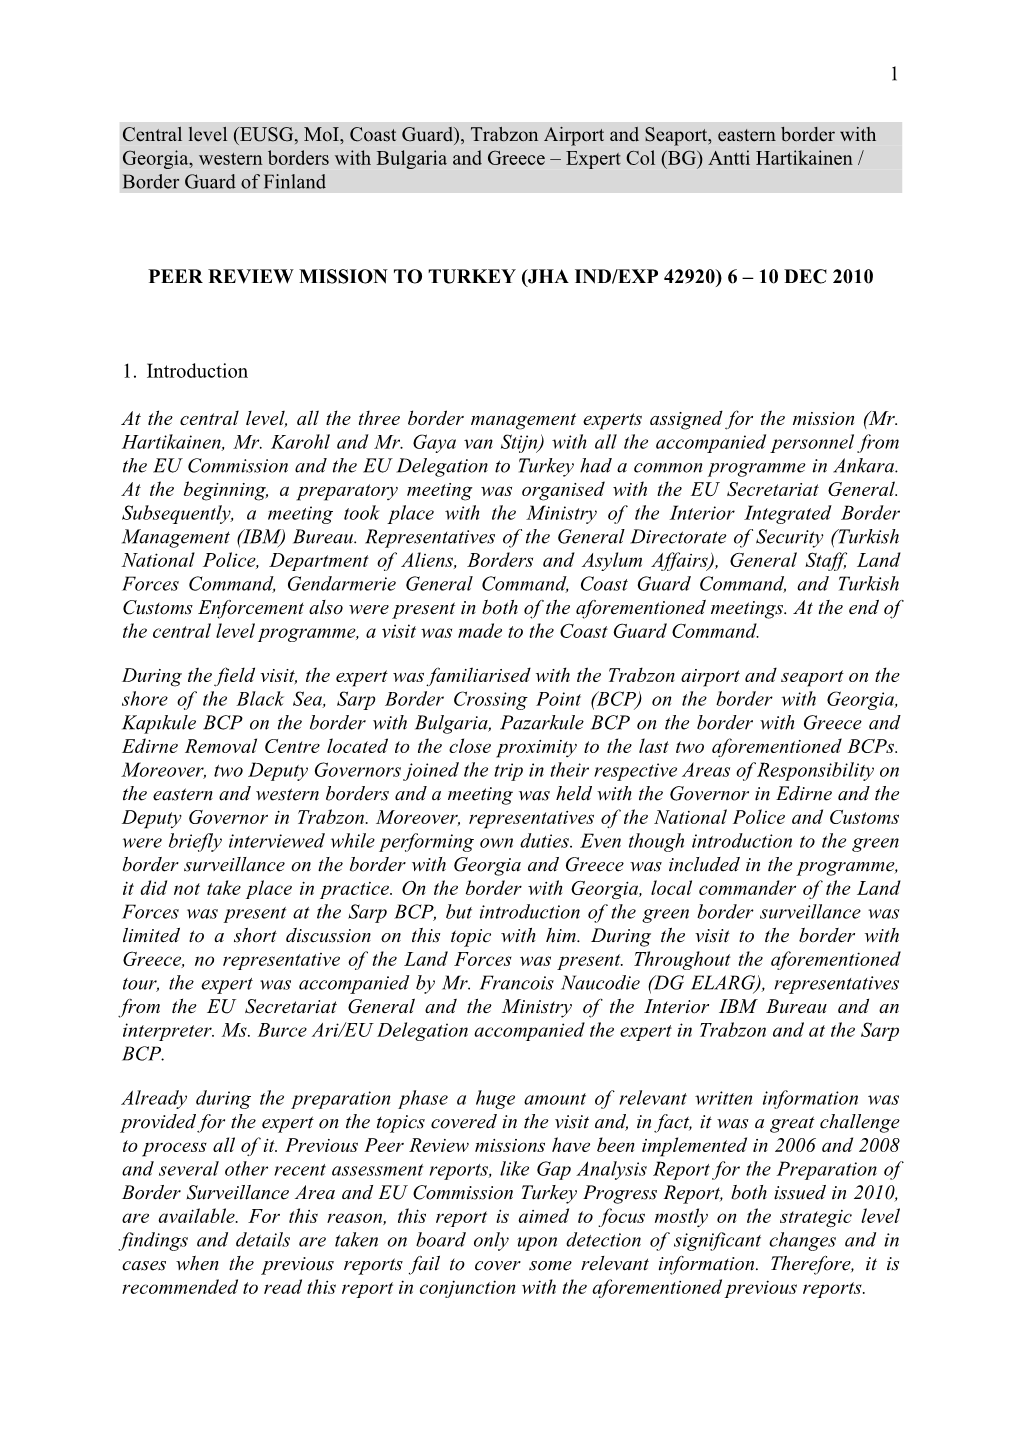 2010 Peer Review Report by Hartikainen Frontiers Trabzon